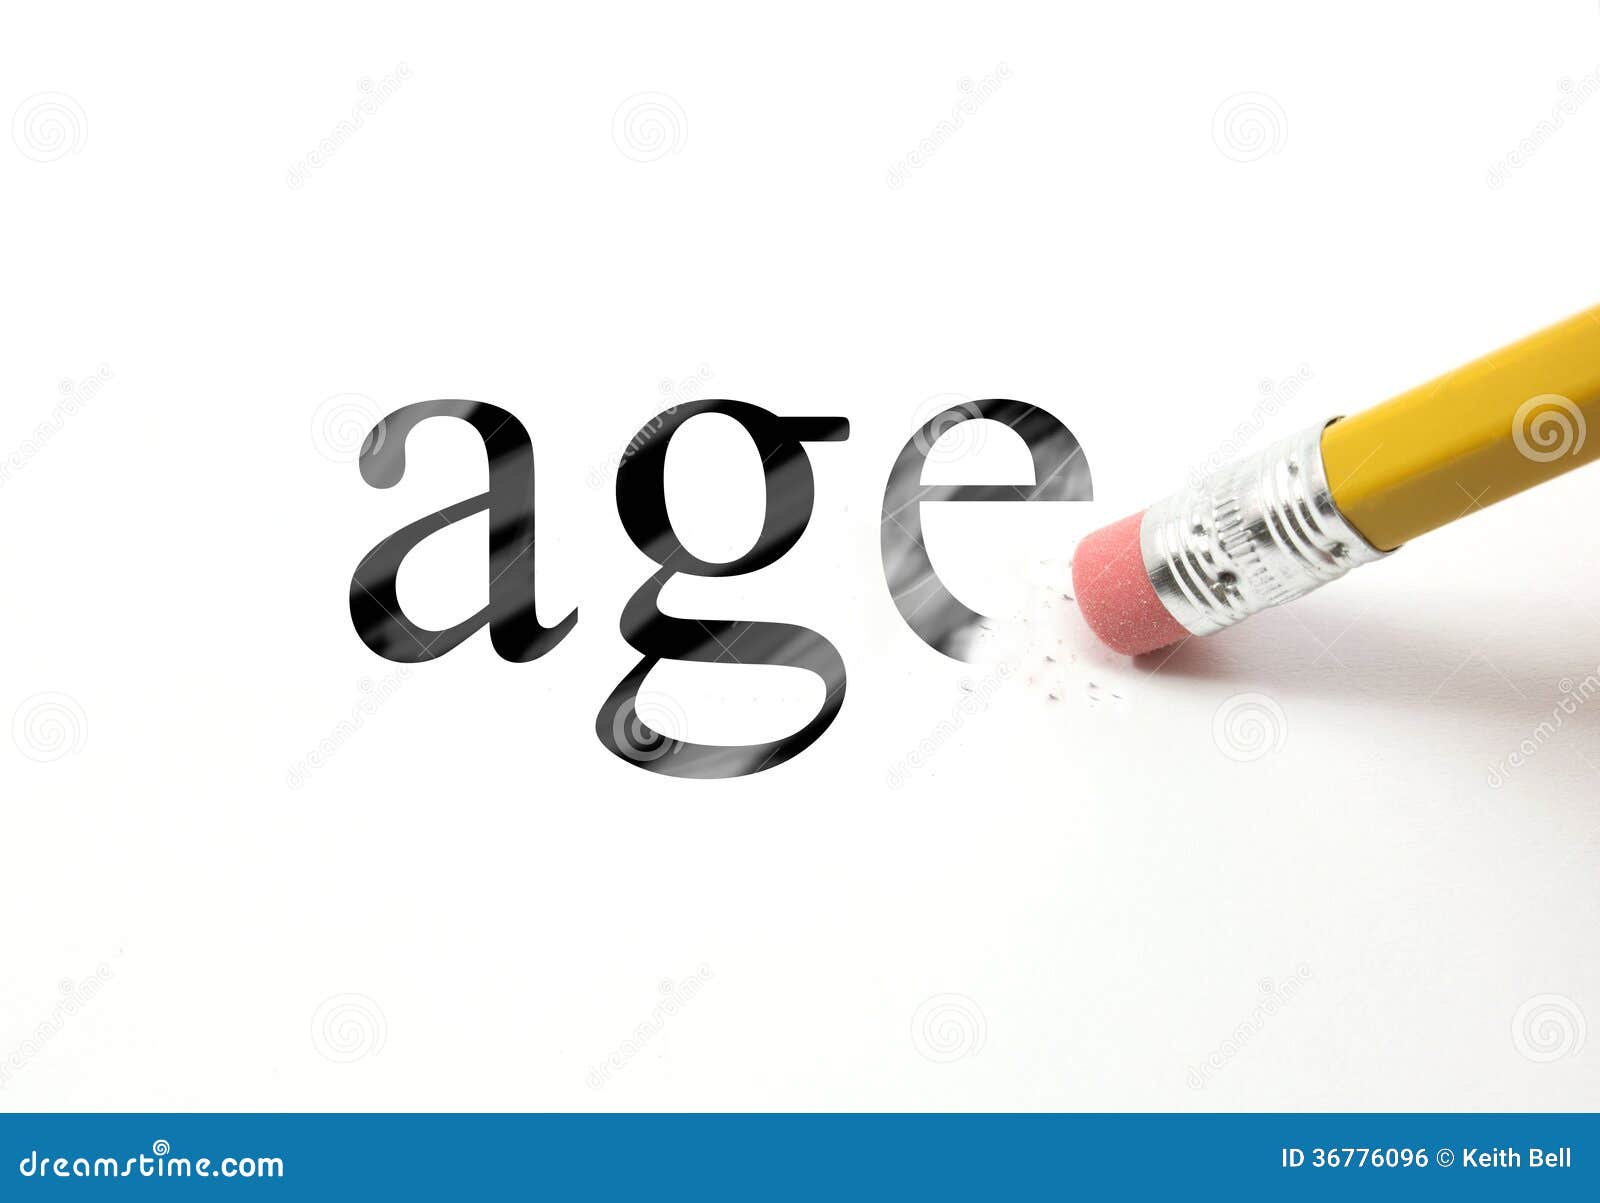 erase your age